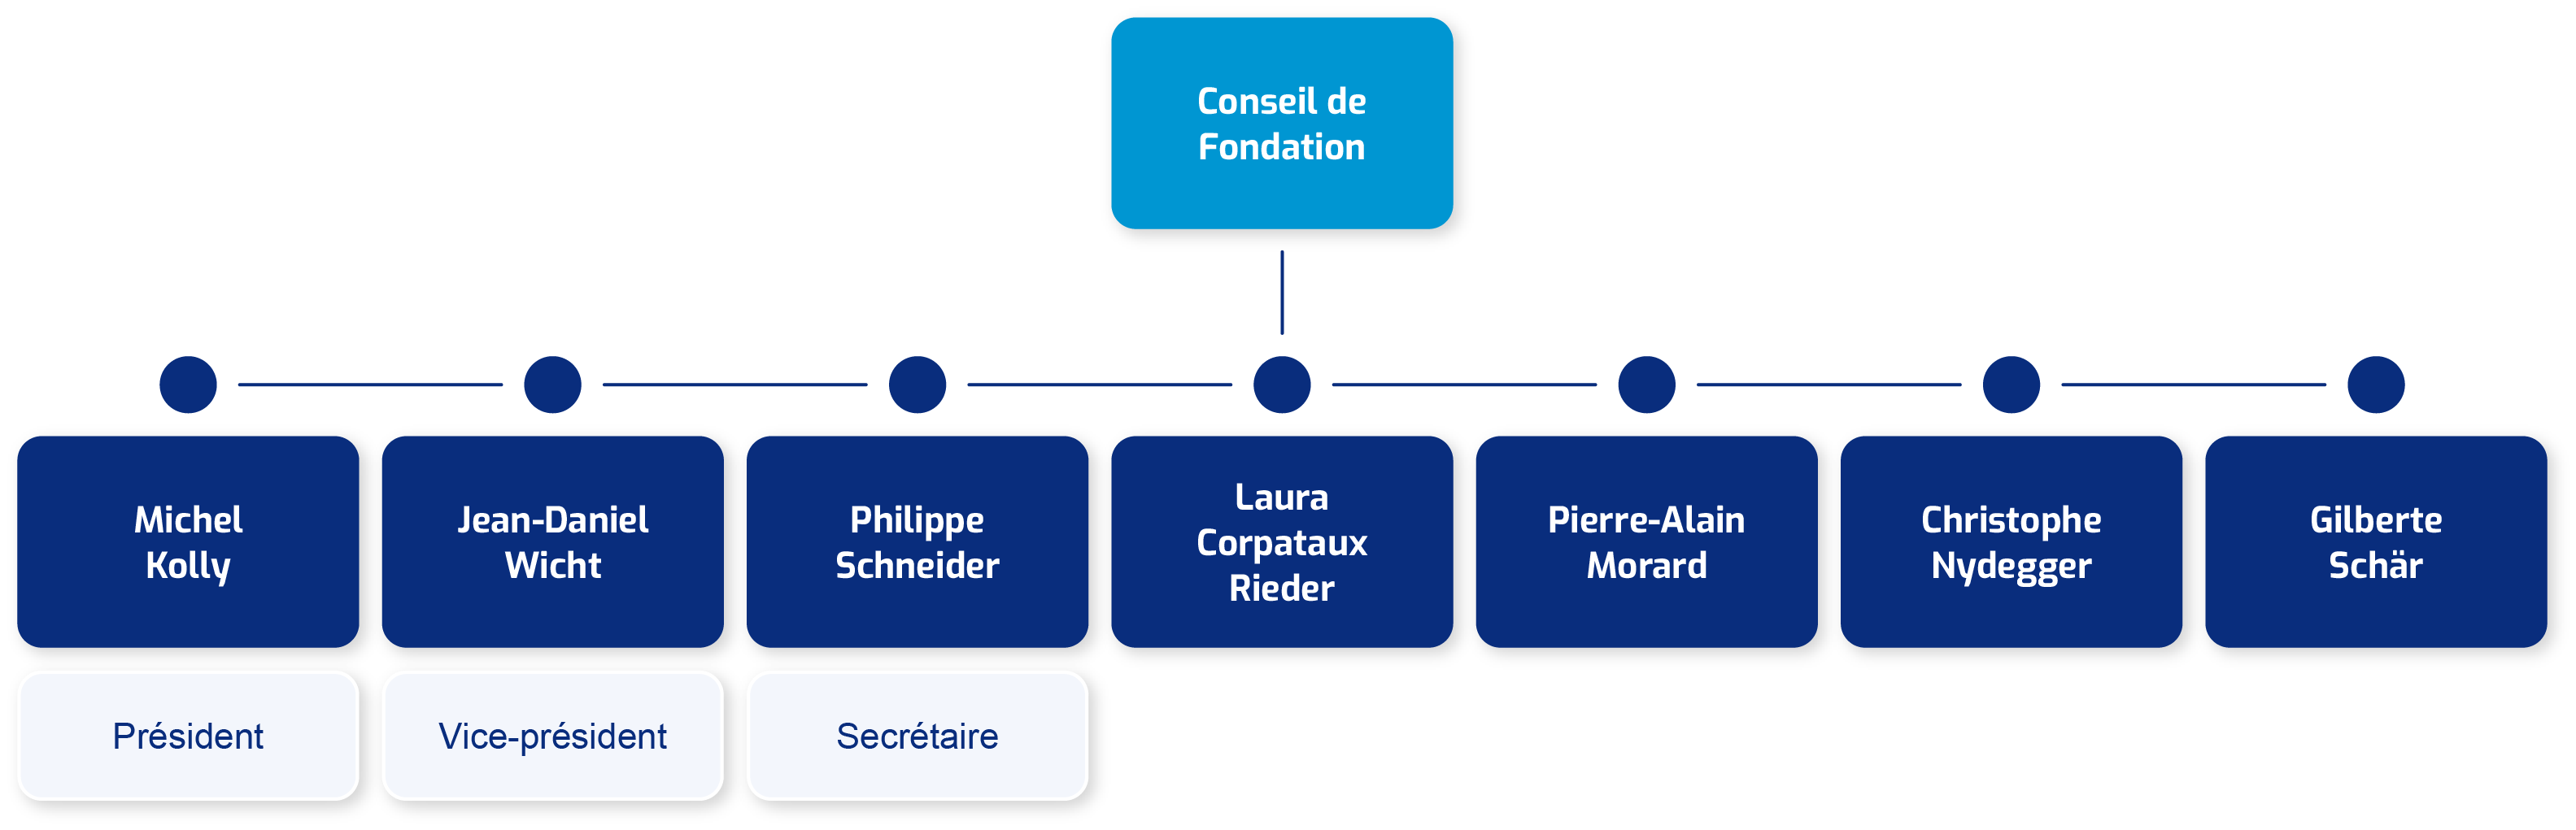 Organigramme du Conseil de Fondation de la fondation PROF-in.